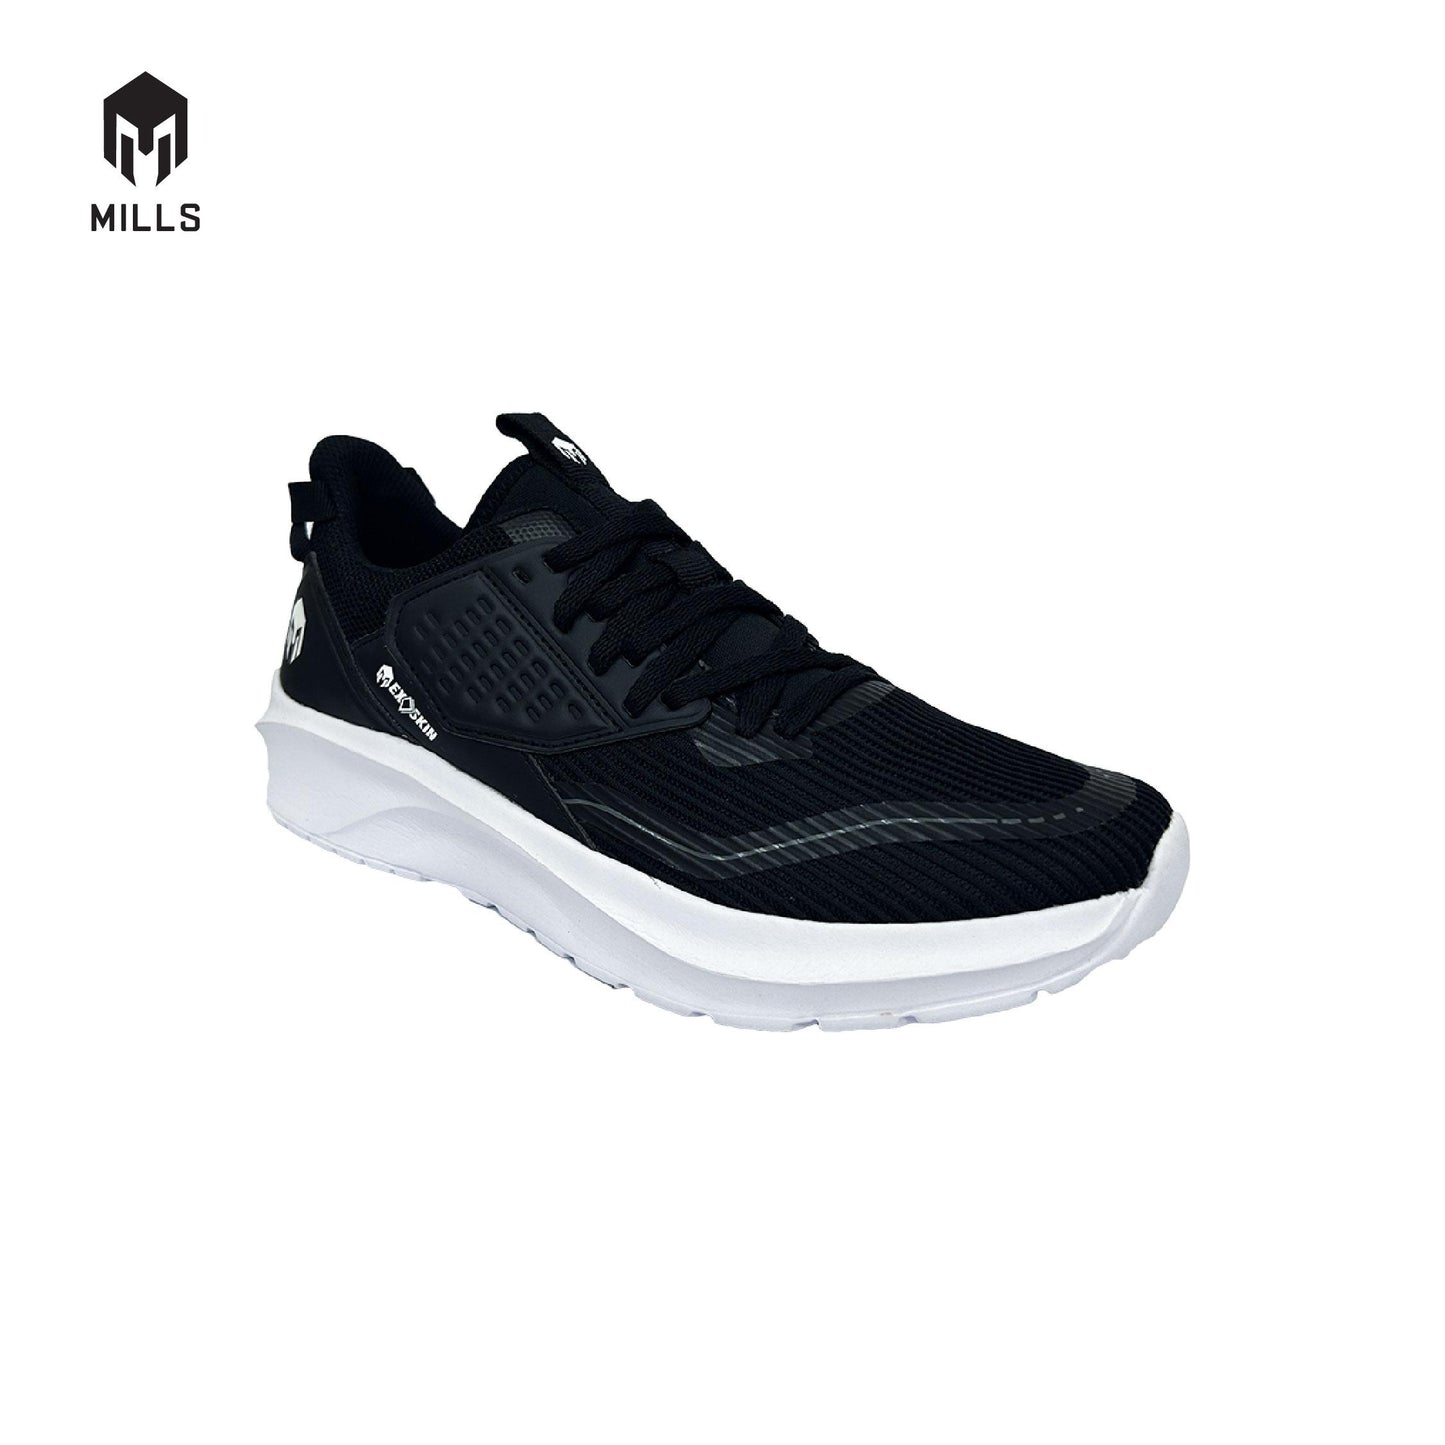 MILLS Sepatu Evander Black / White 9700802